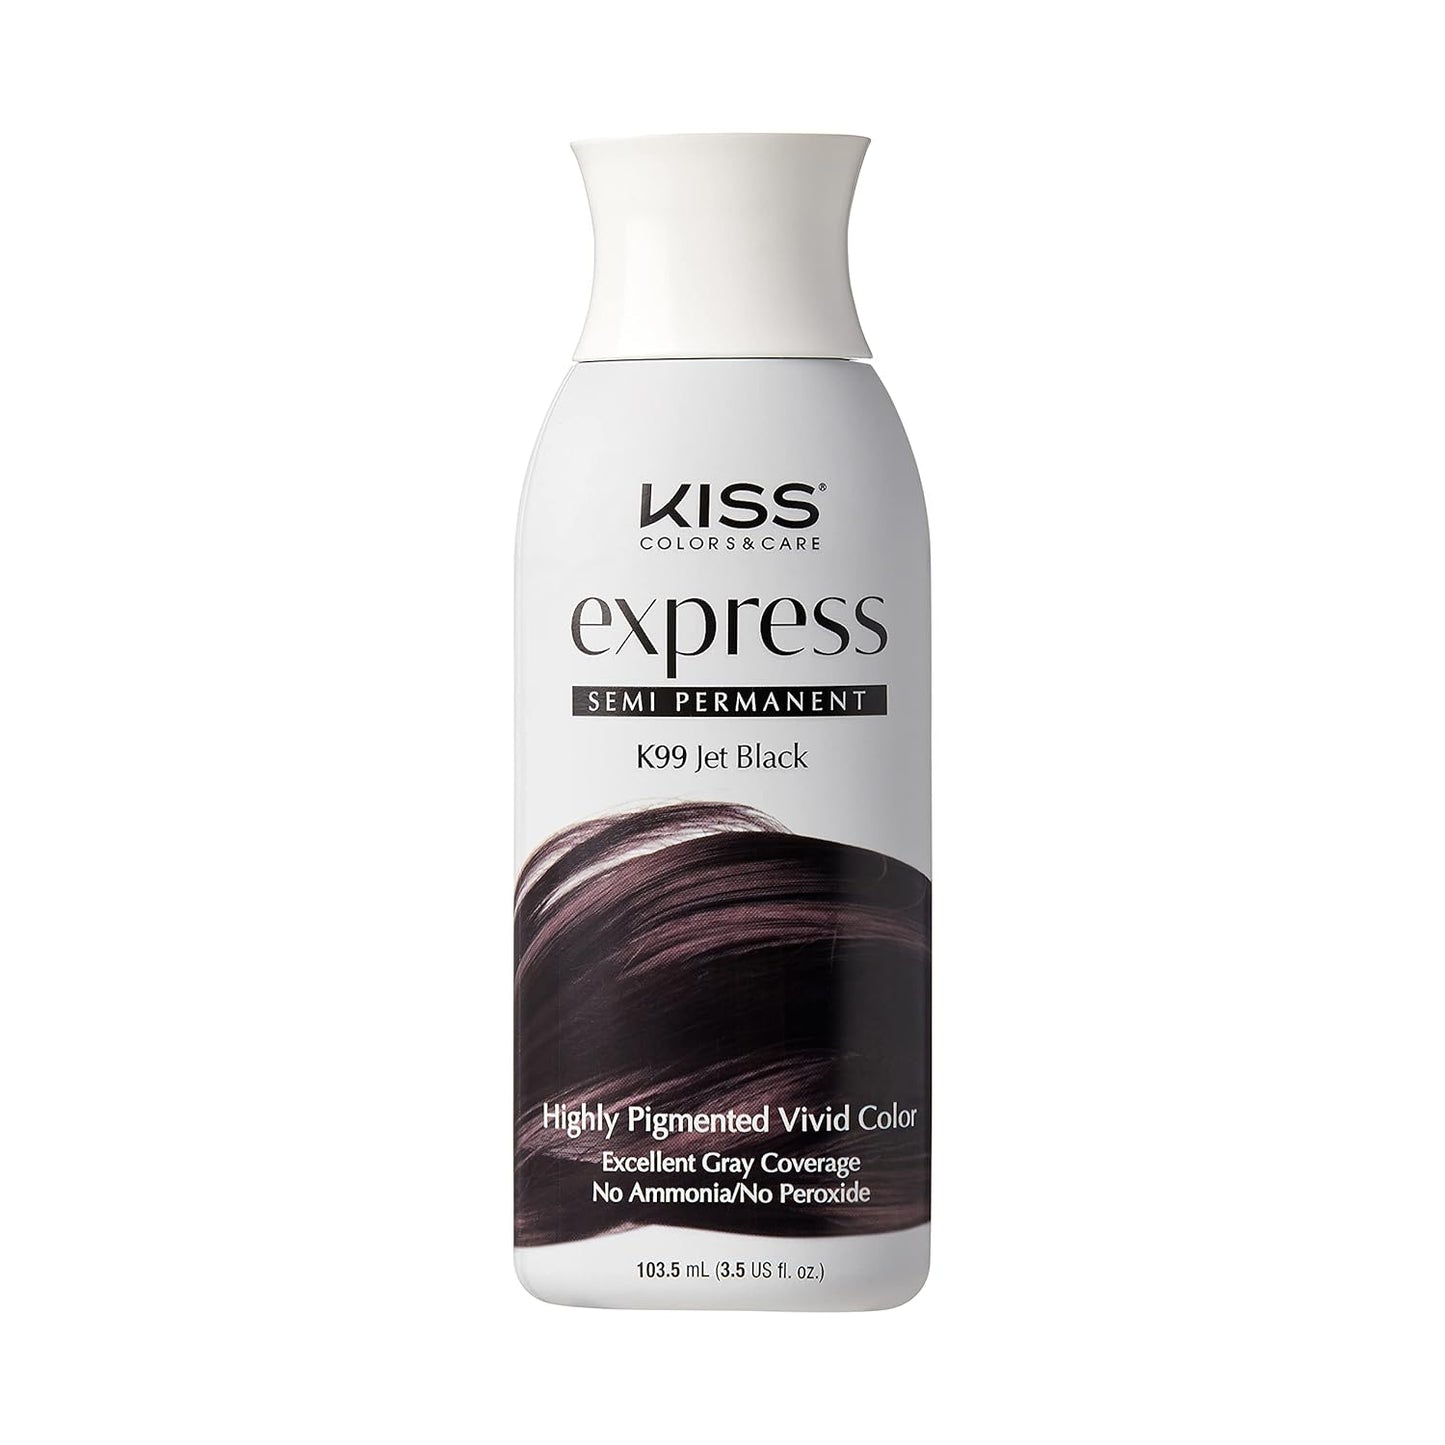 Express Semi Permanent Hair Color (K99)